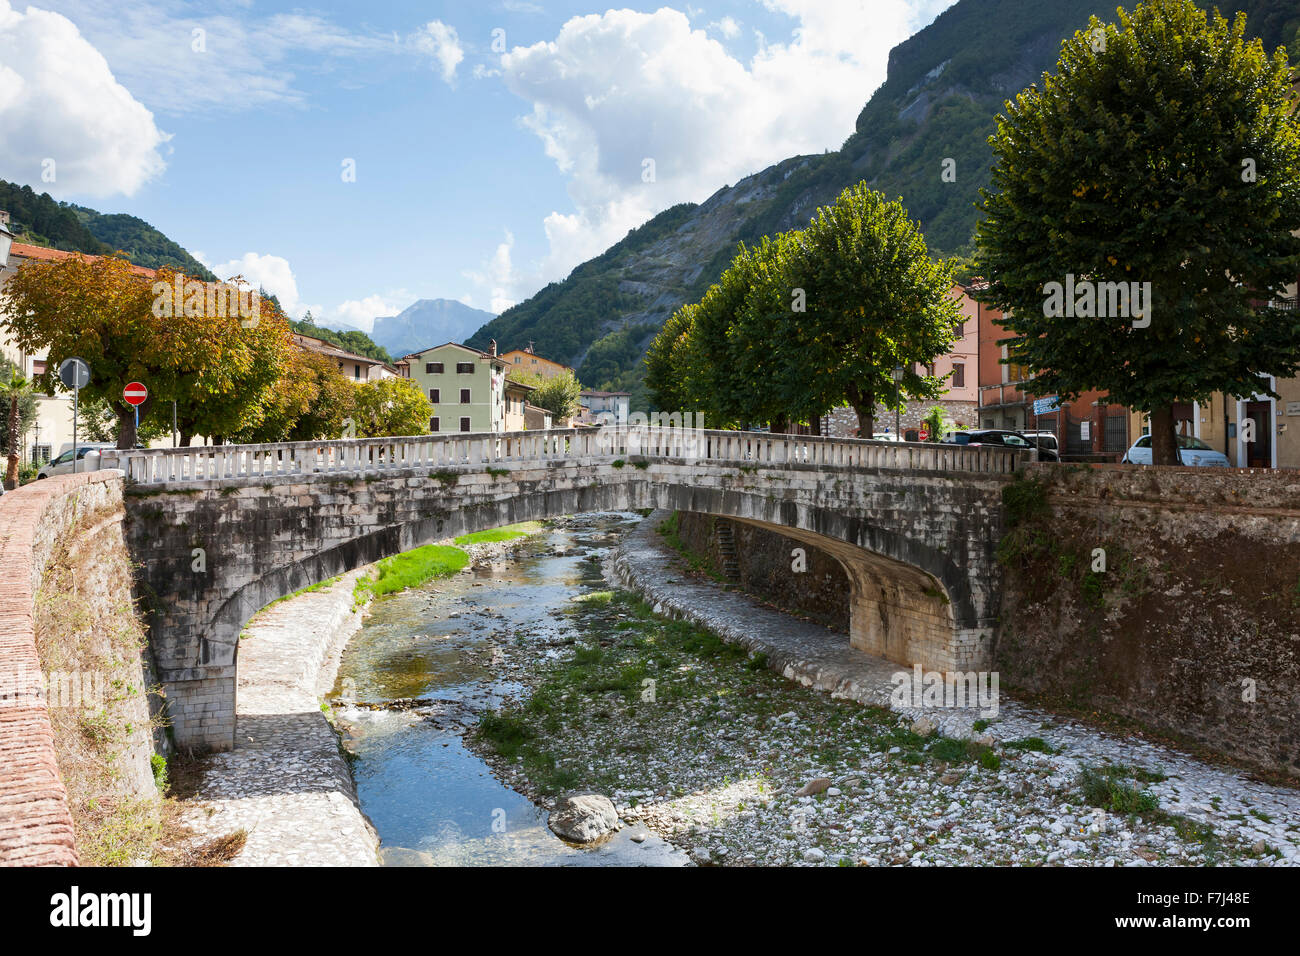 The River Vezza flows through the pretty Tuscan town of Seravezza, Tuscany, Italy. Stock Photo